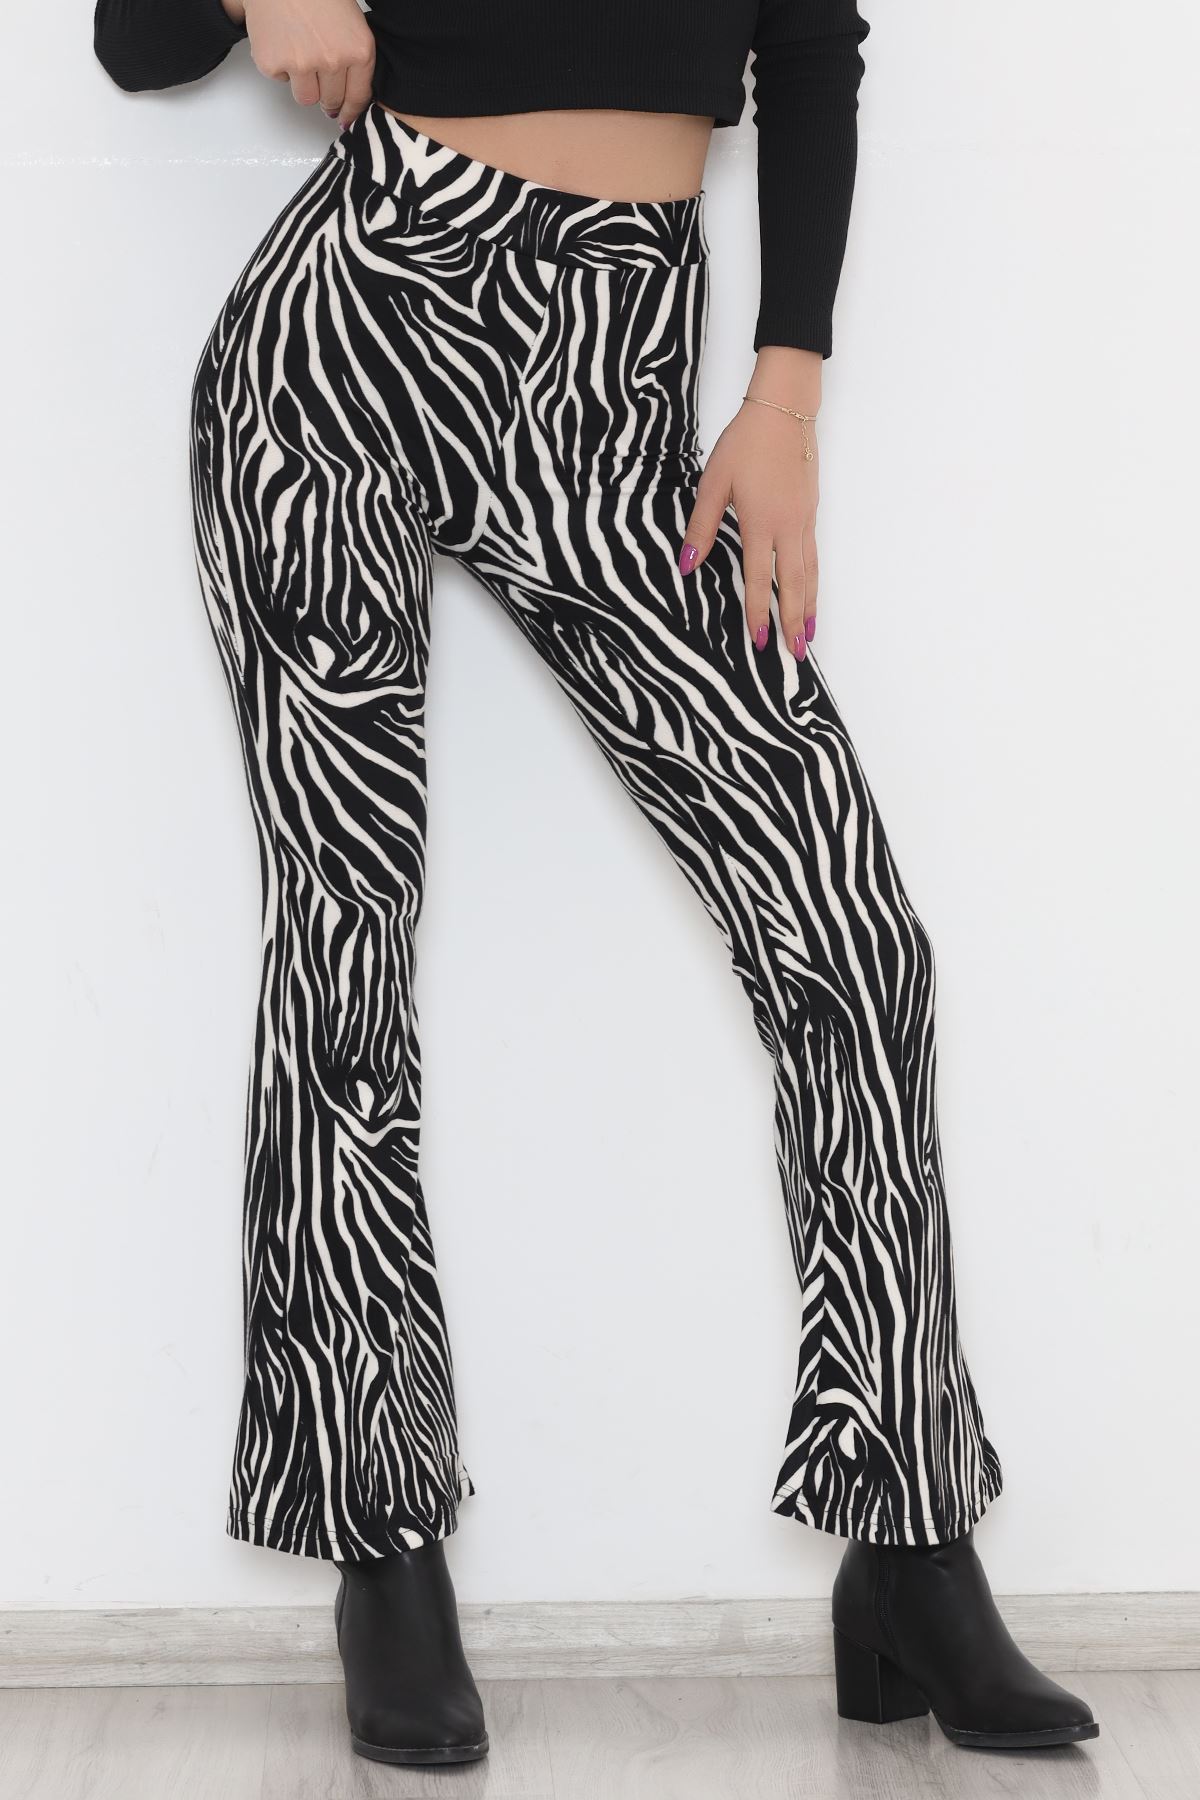 SHEIN Zebra Striped Print Flare Pants